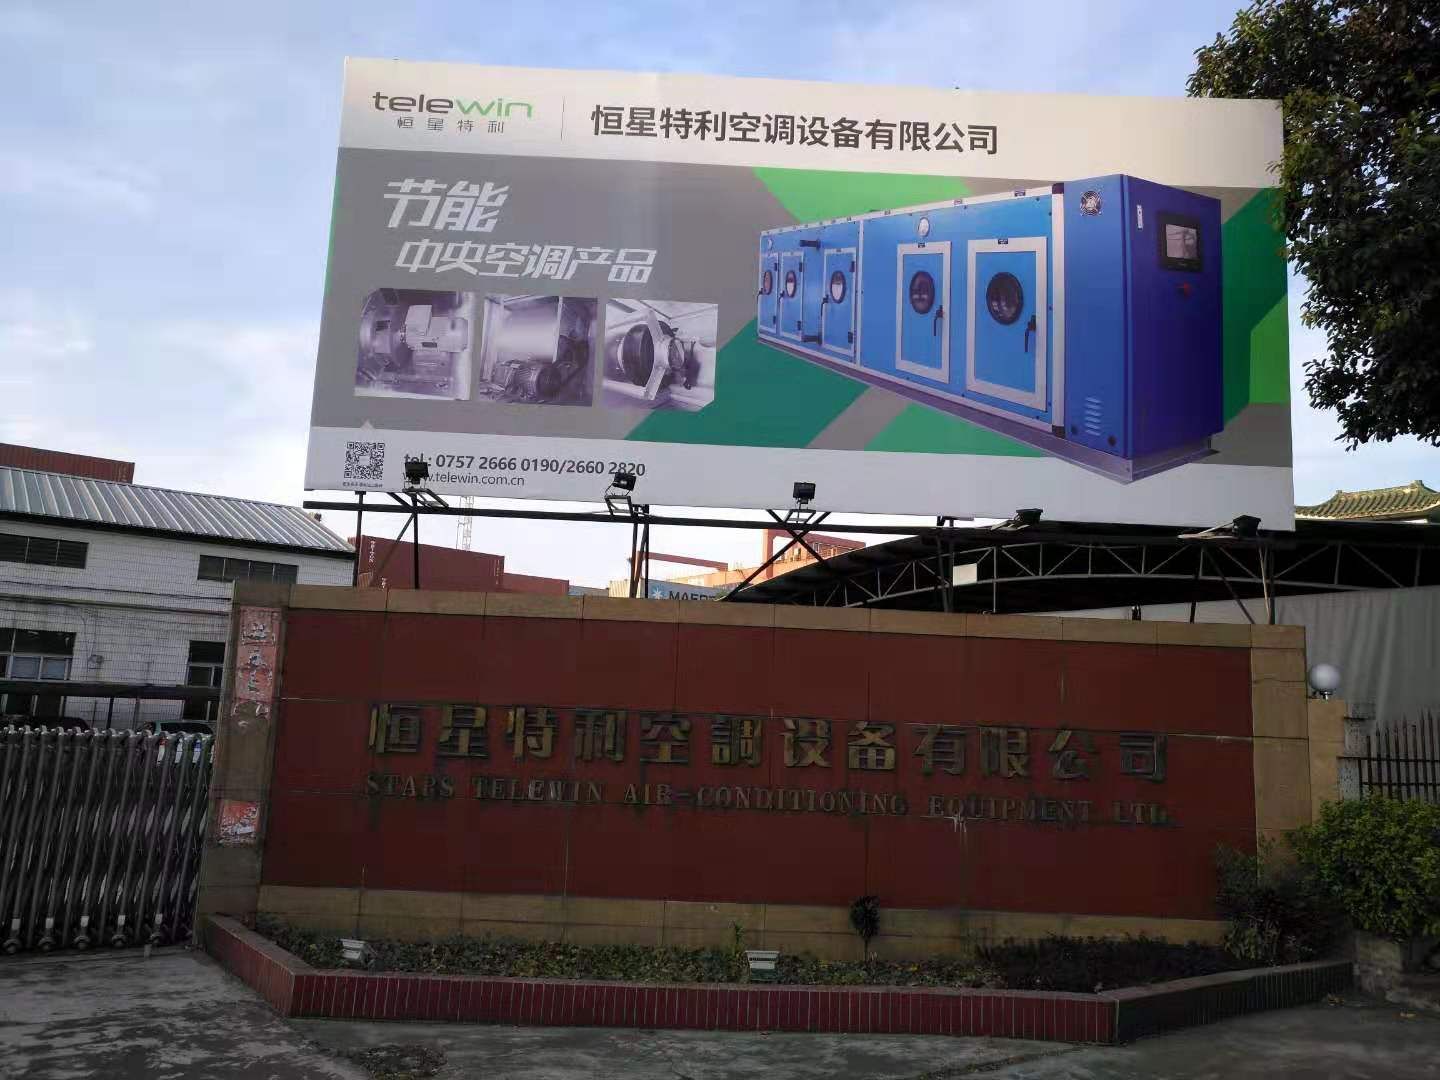 Foshan Shunde Hstars Telewin Air Conditioning Equipment Co., Ltd. Main Image